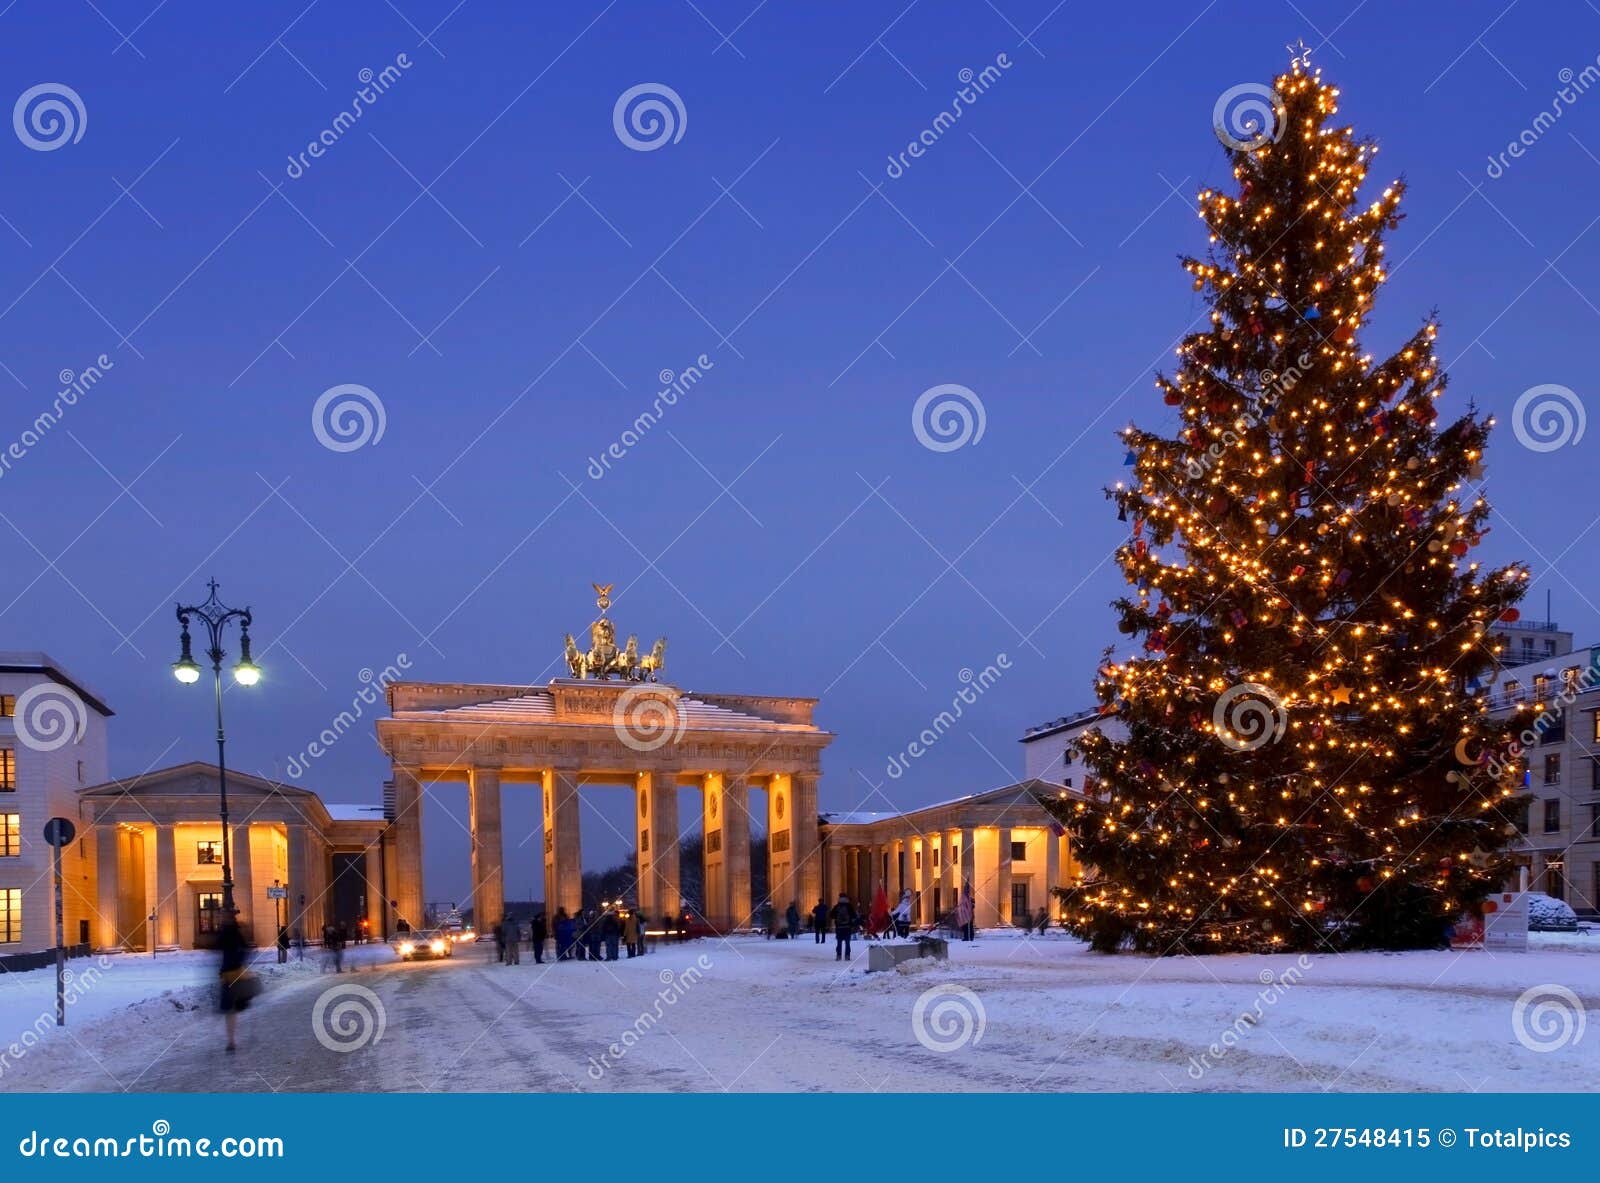 berlin christmas brandenburg gate